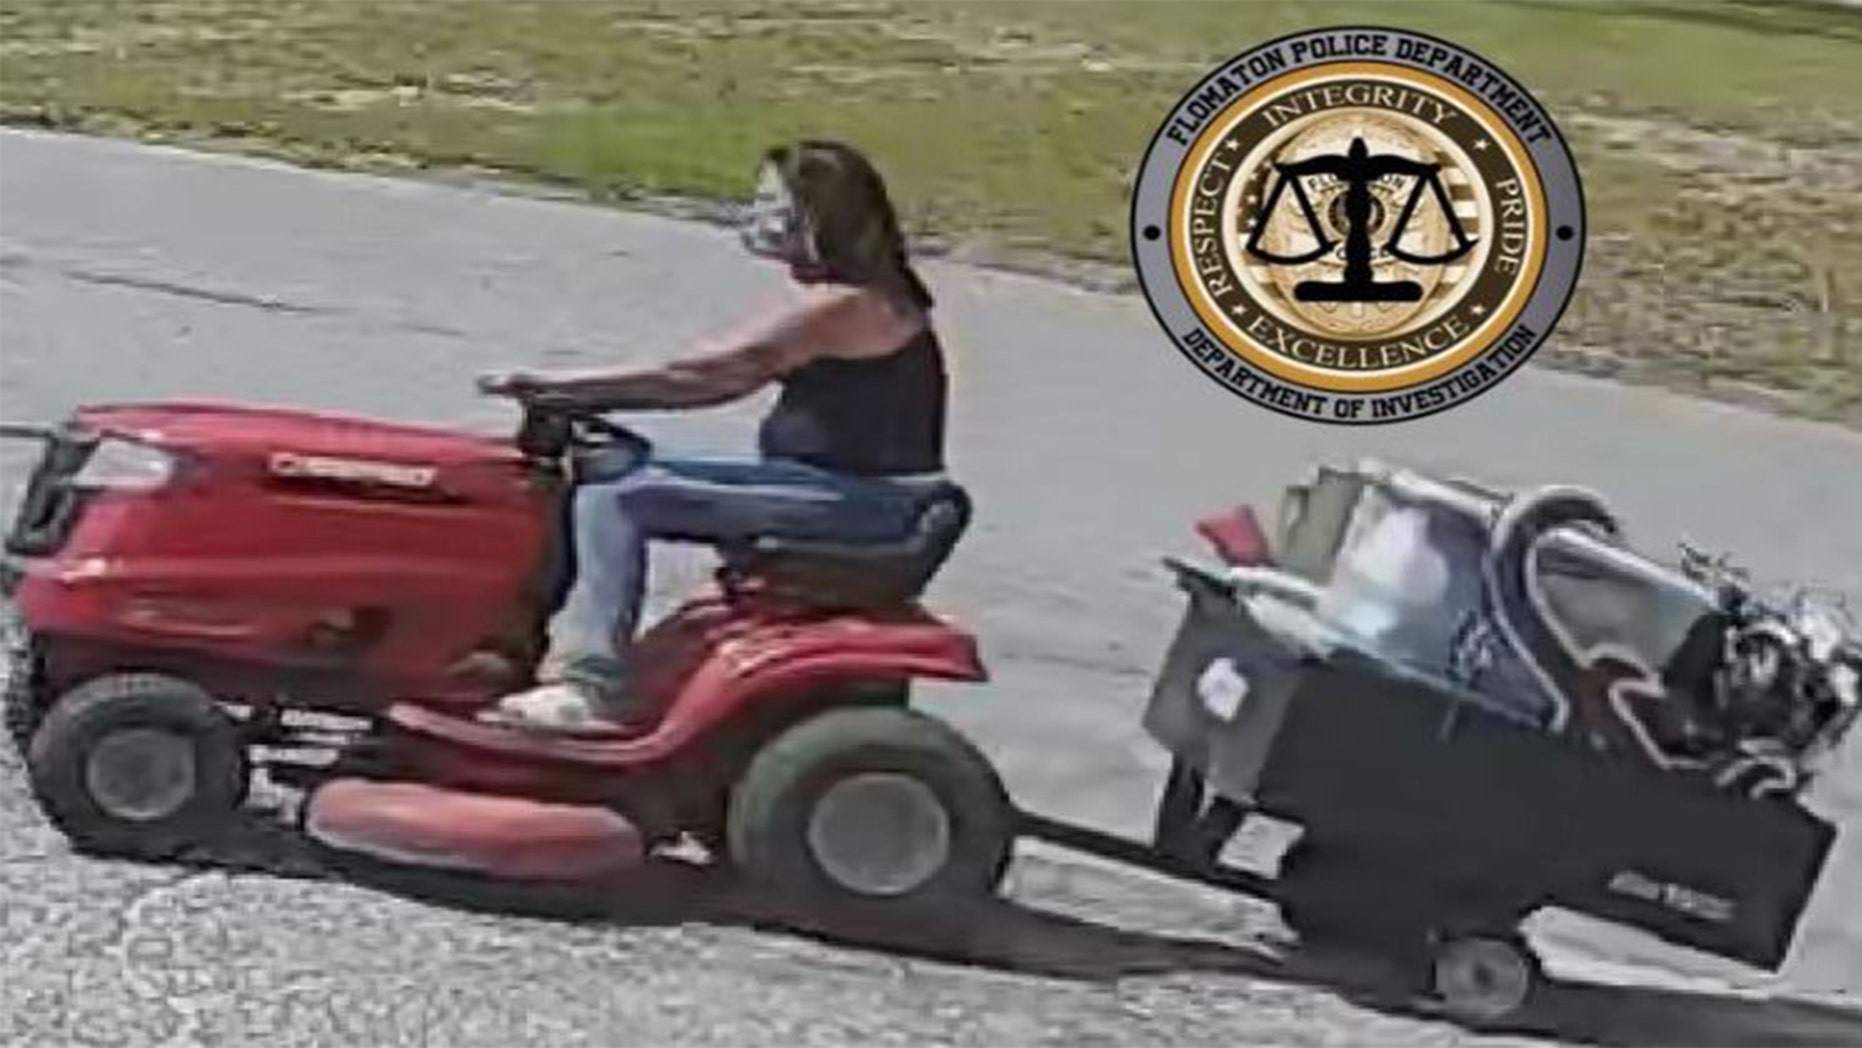 A woman riding a lawnmower